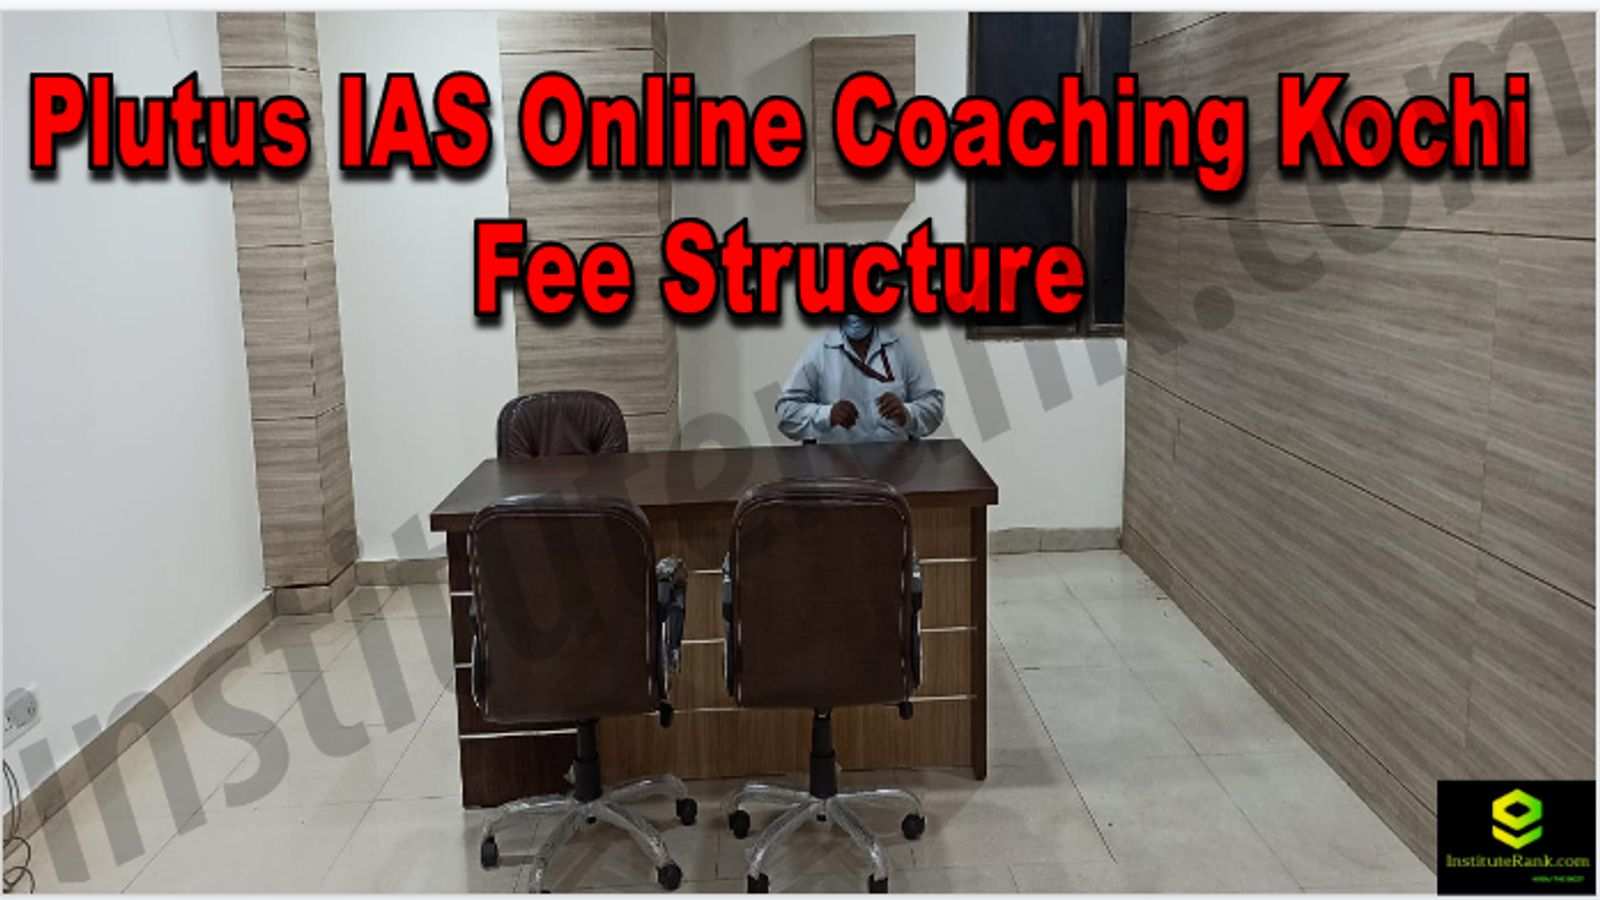 Plutus IAS Online Coaching Kochi Reviews Fee Structure